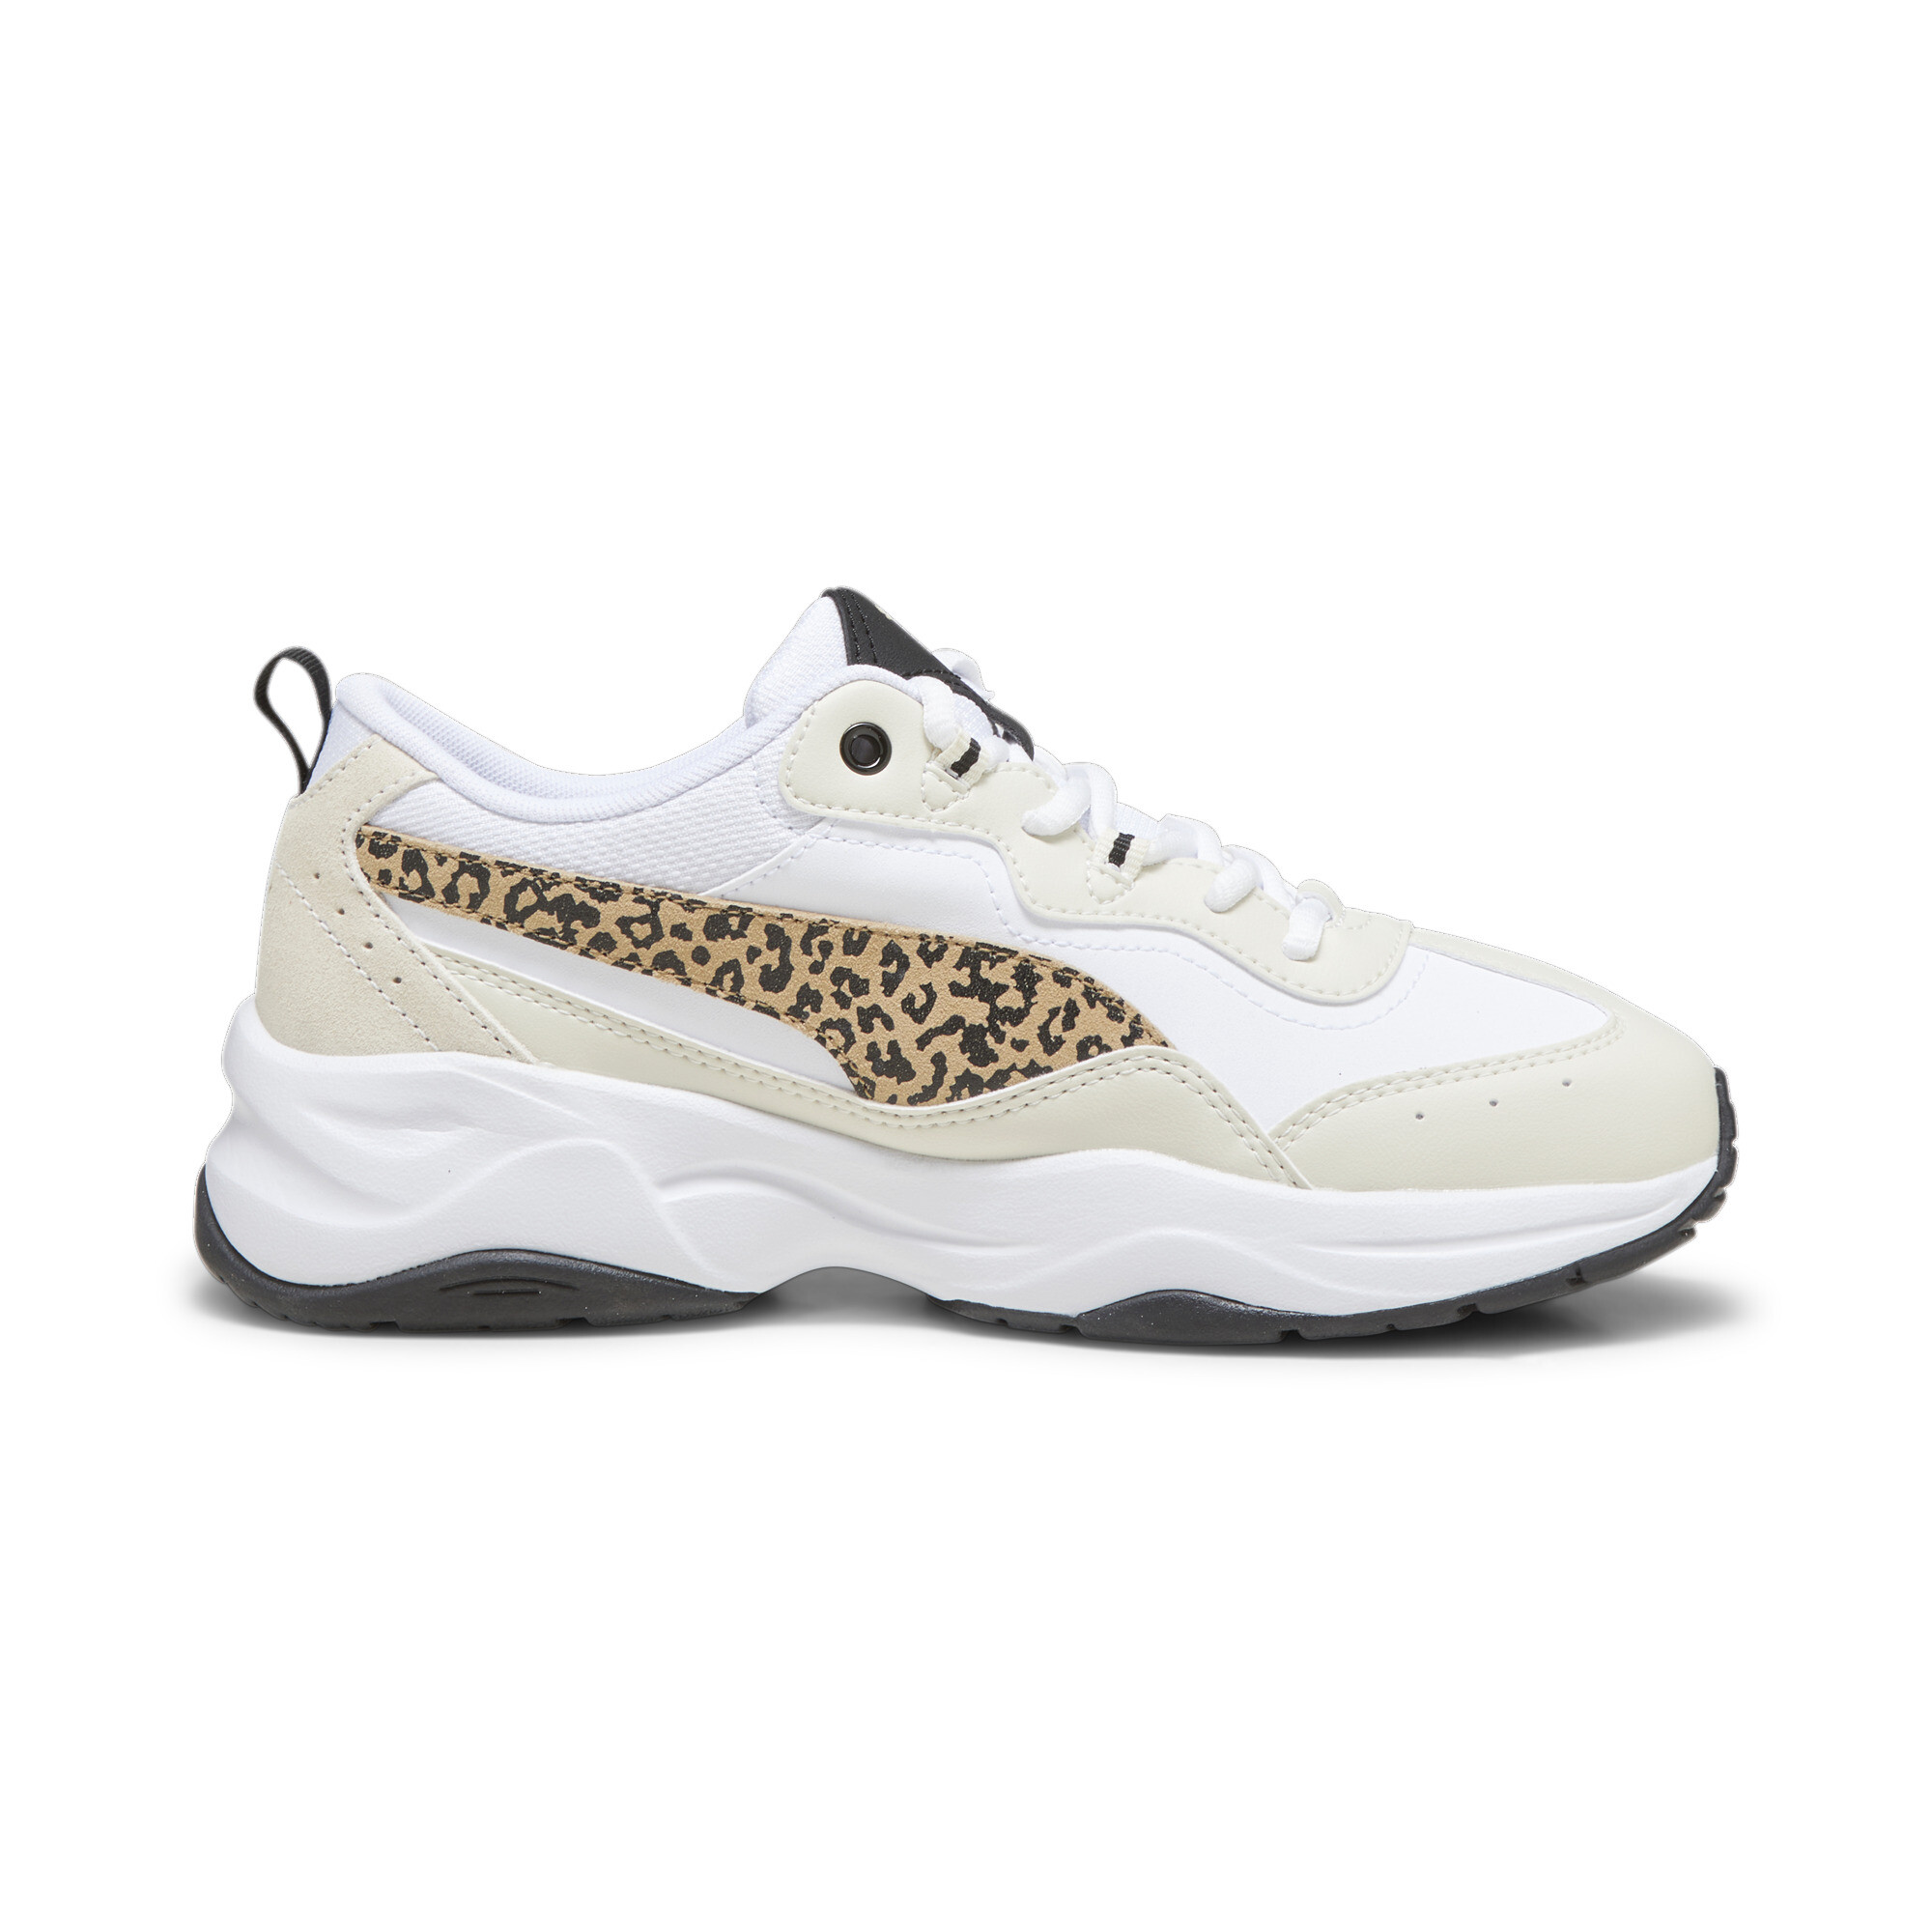 Women's Puma Cilia Animal's Sneakers, White, Size 37, Shoes